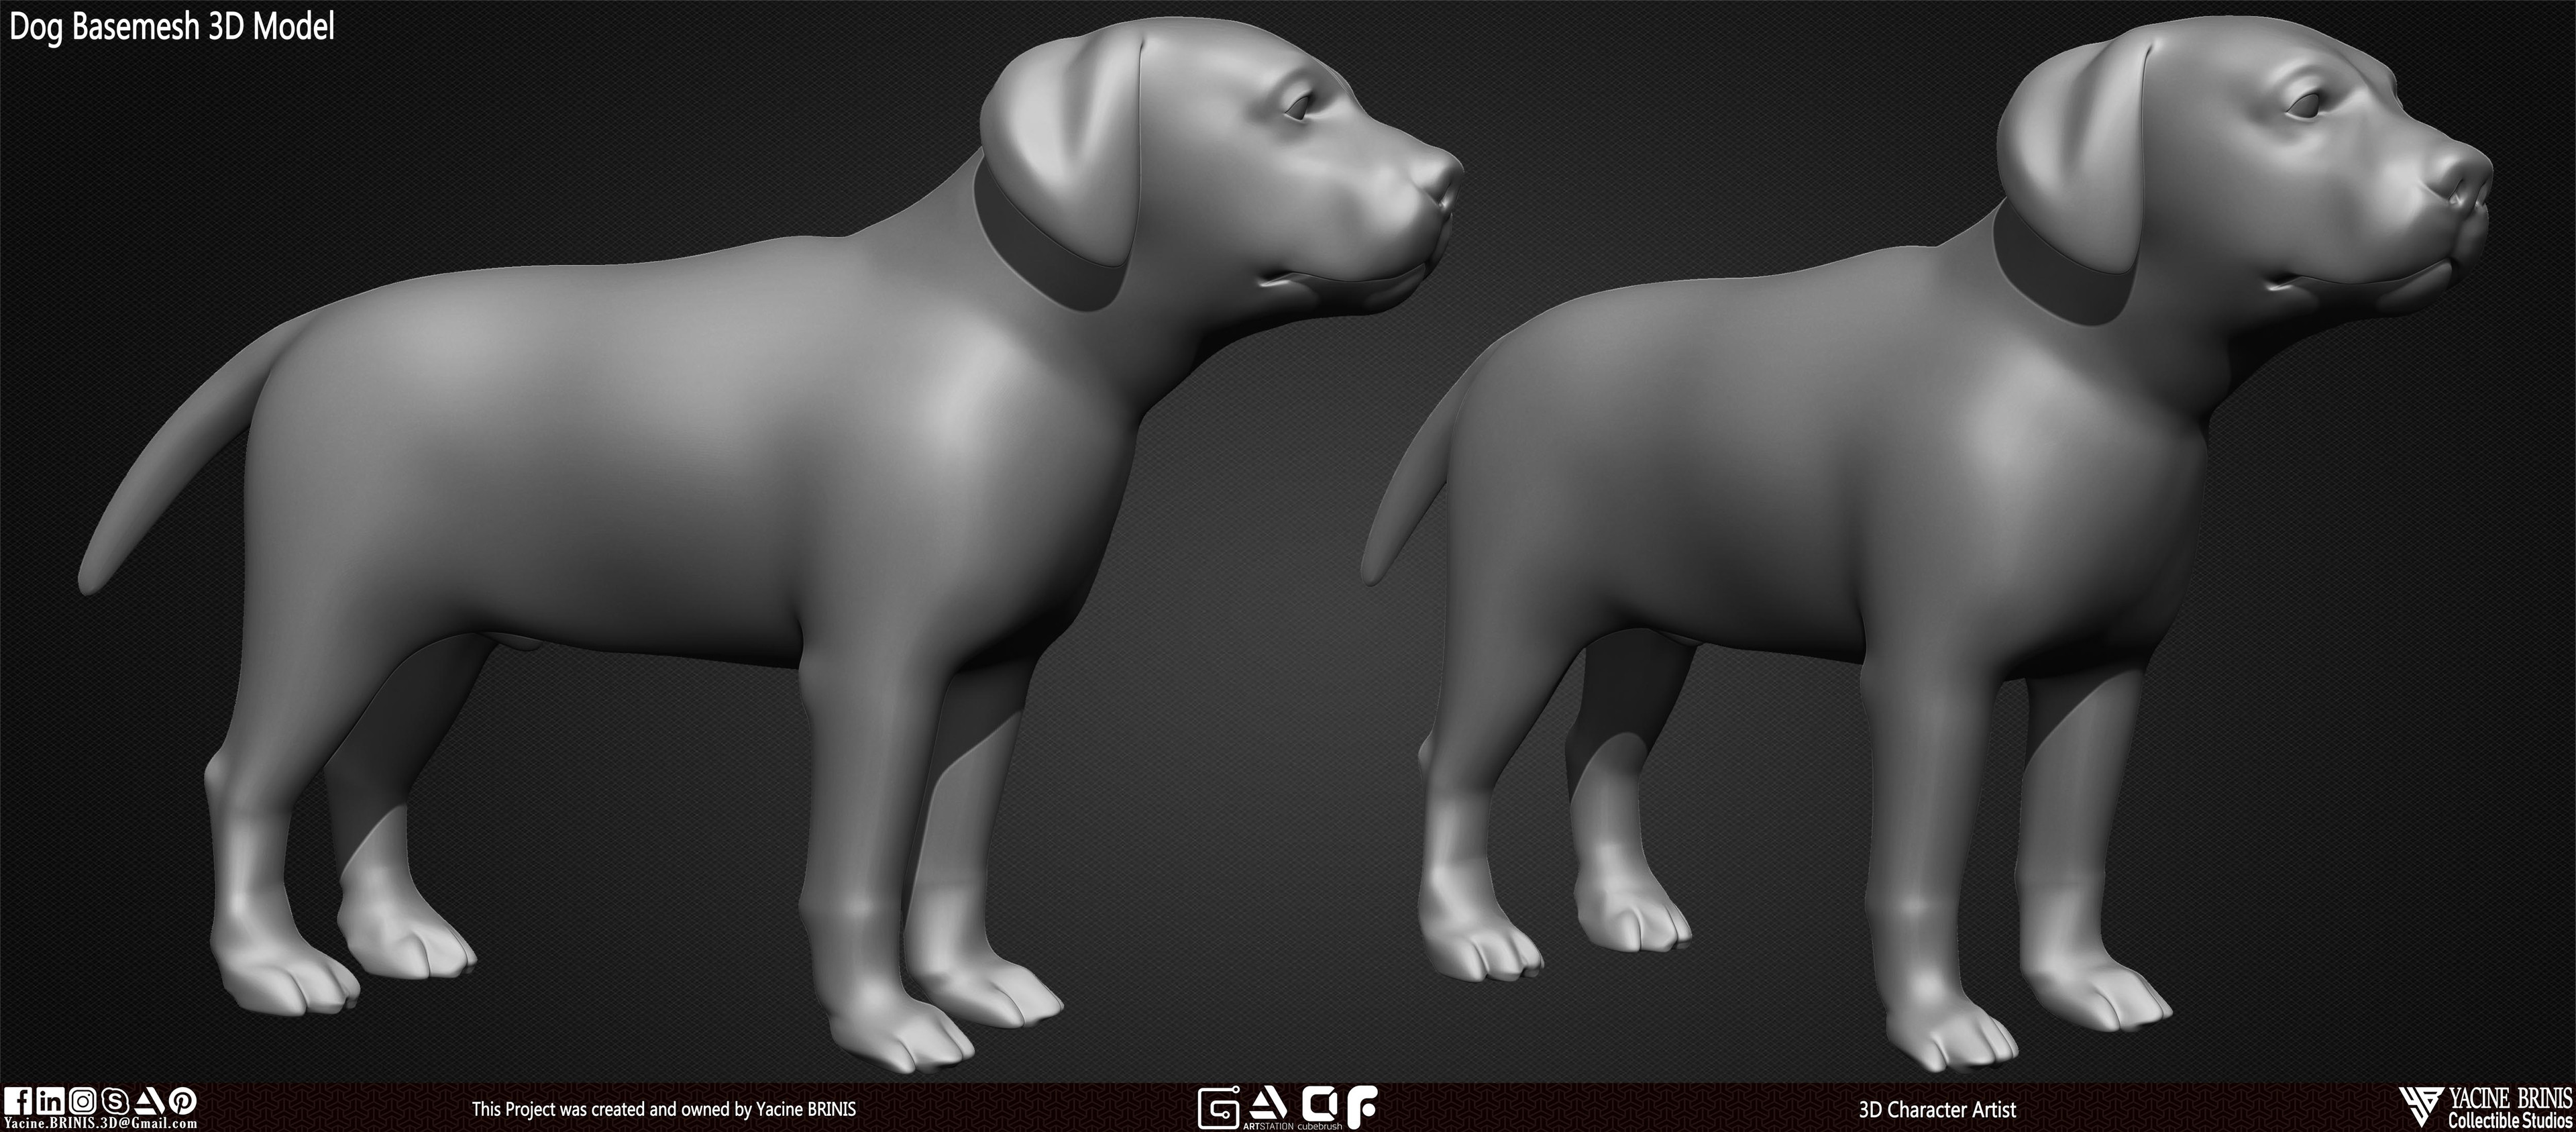 Dog Basemesh 3D Model Vol 01 sculpted By Yacine BRINIS Set 003